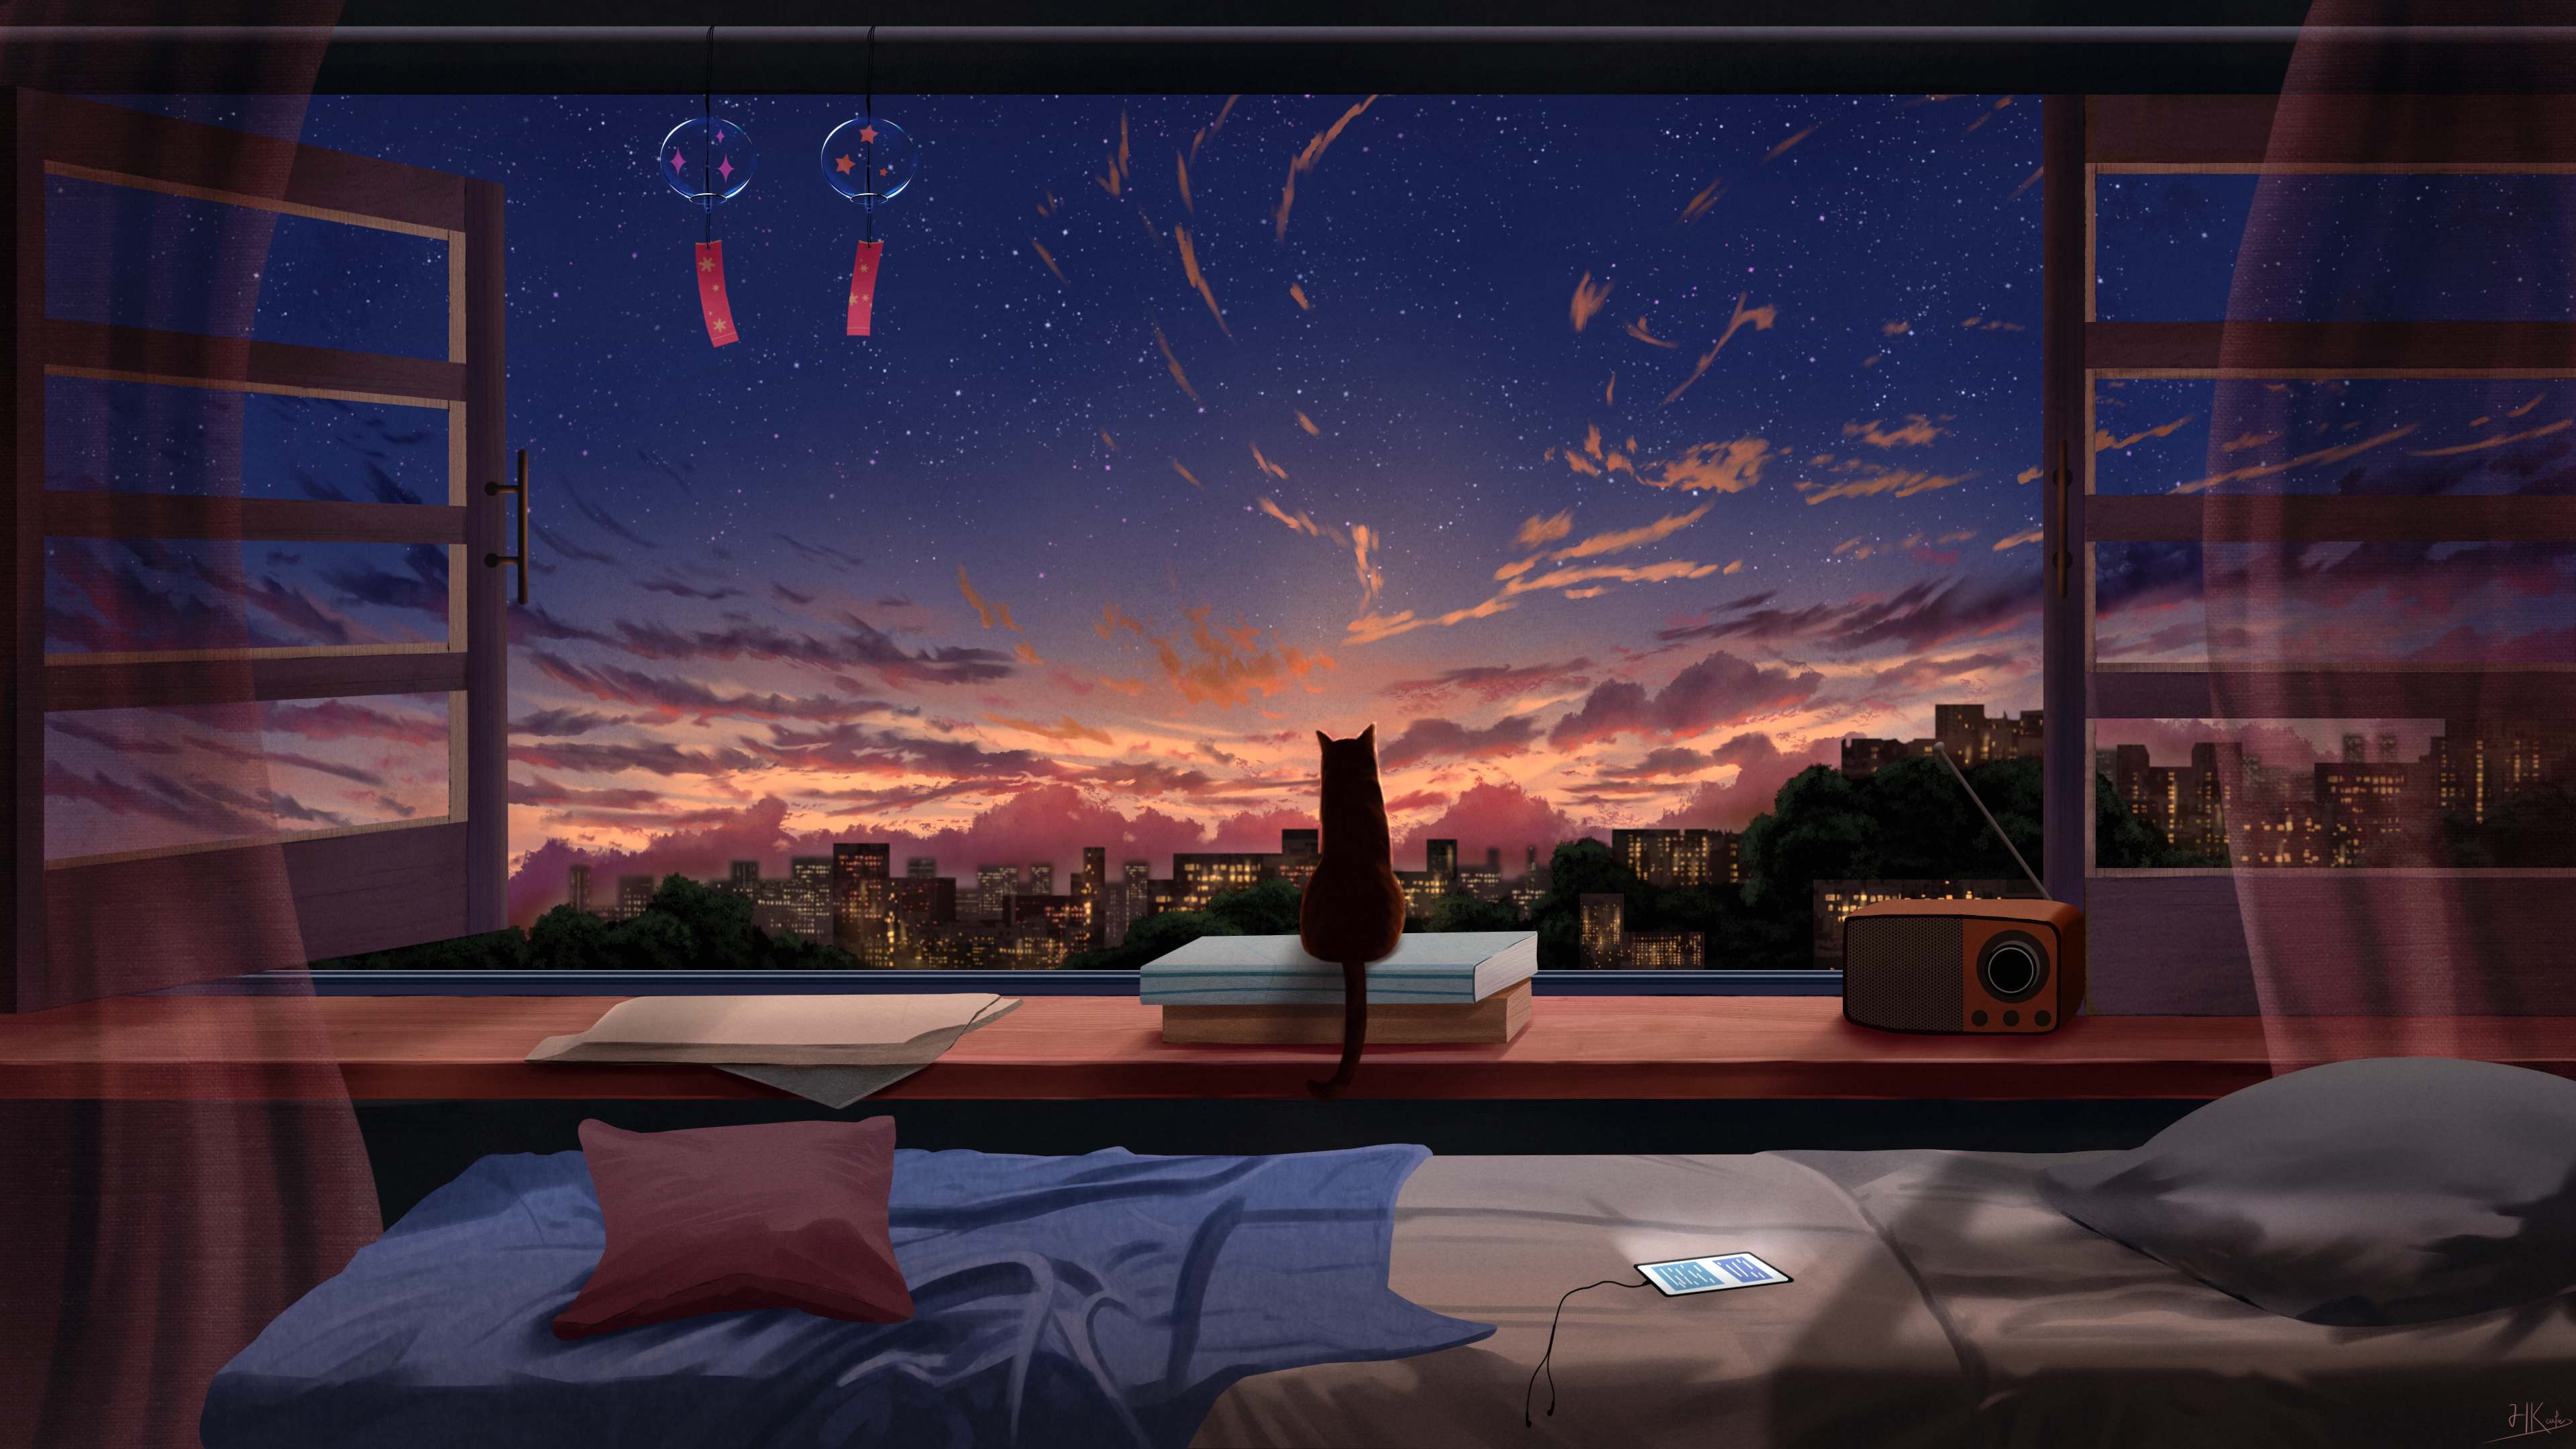 HKcutie Digital Art Artwork Illustration Sunset Sky Clouds Stars Cats Animals Window Interior City C 3840x2160